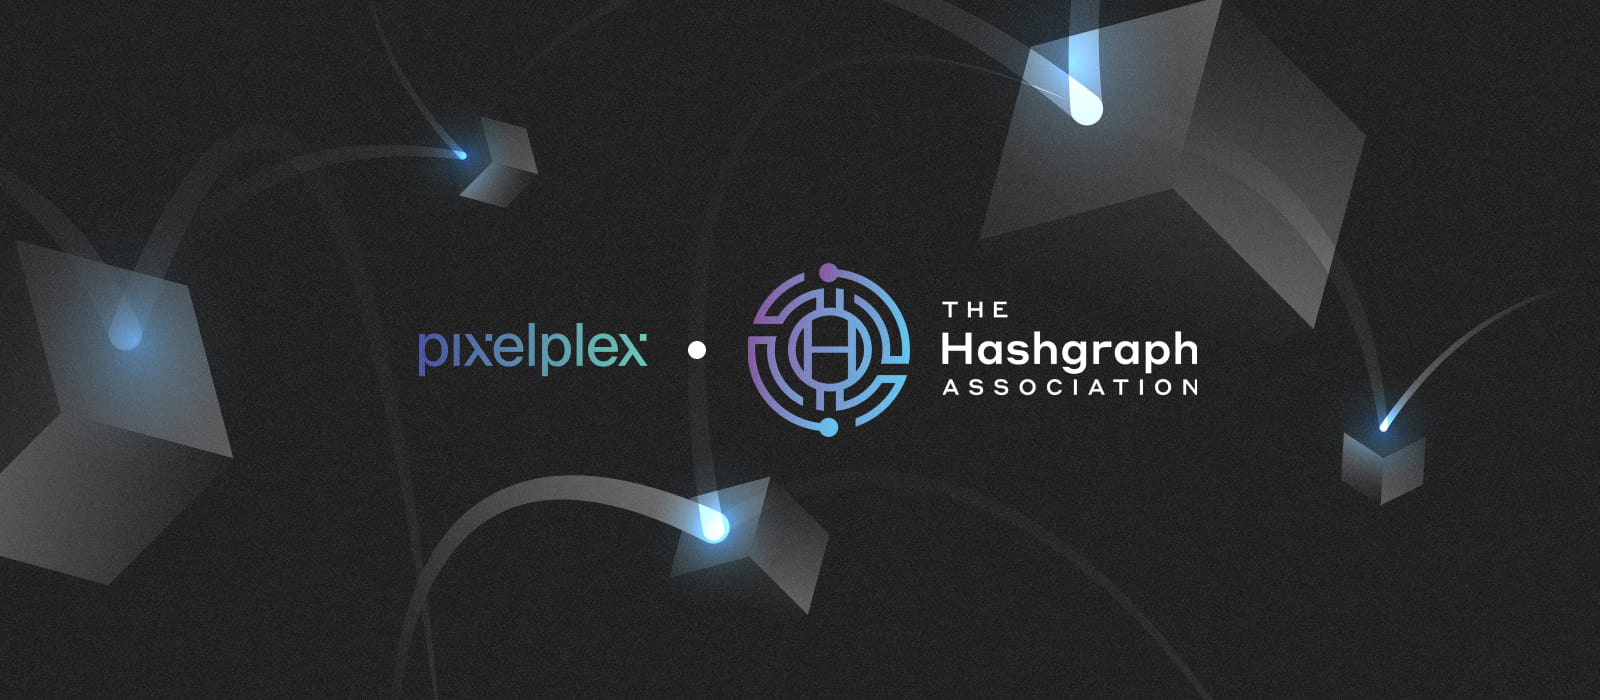 PixelPlex and The Hashgraph Association Partnership